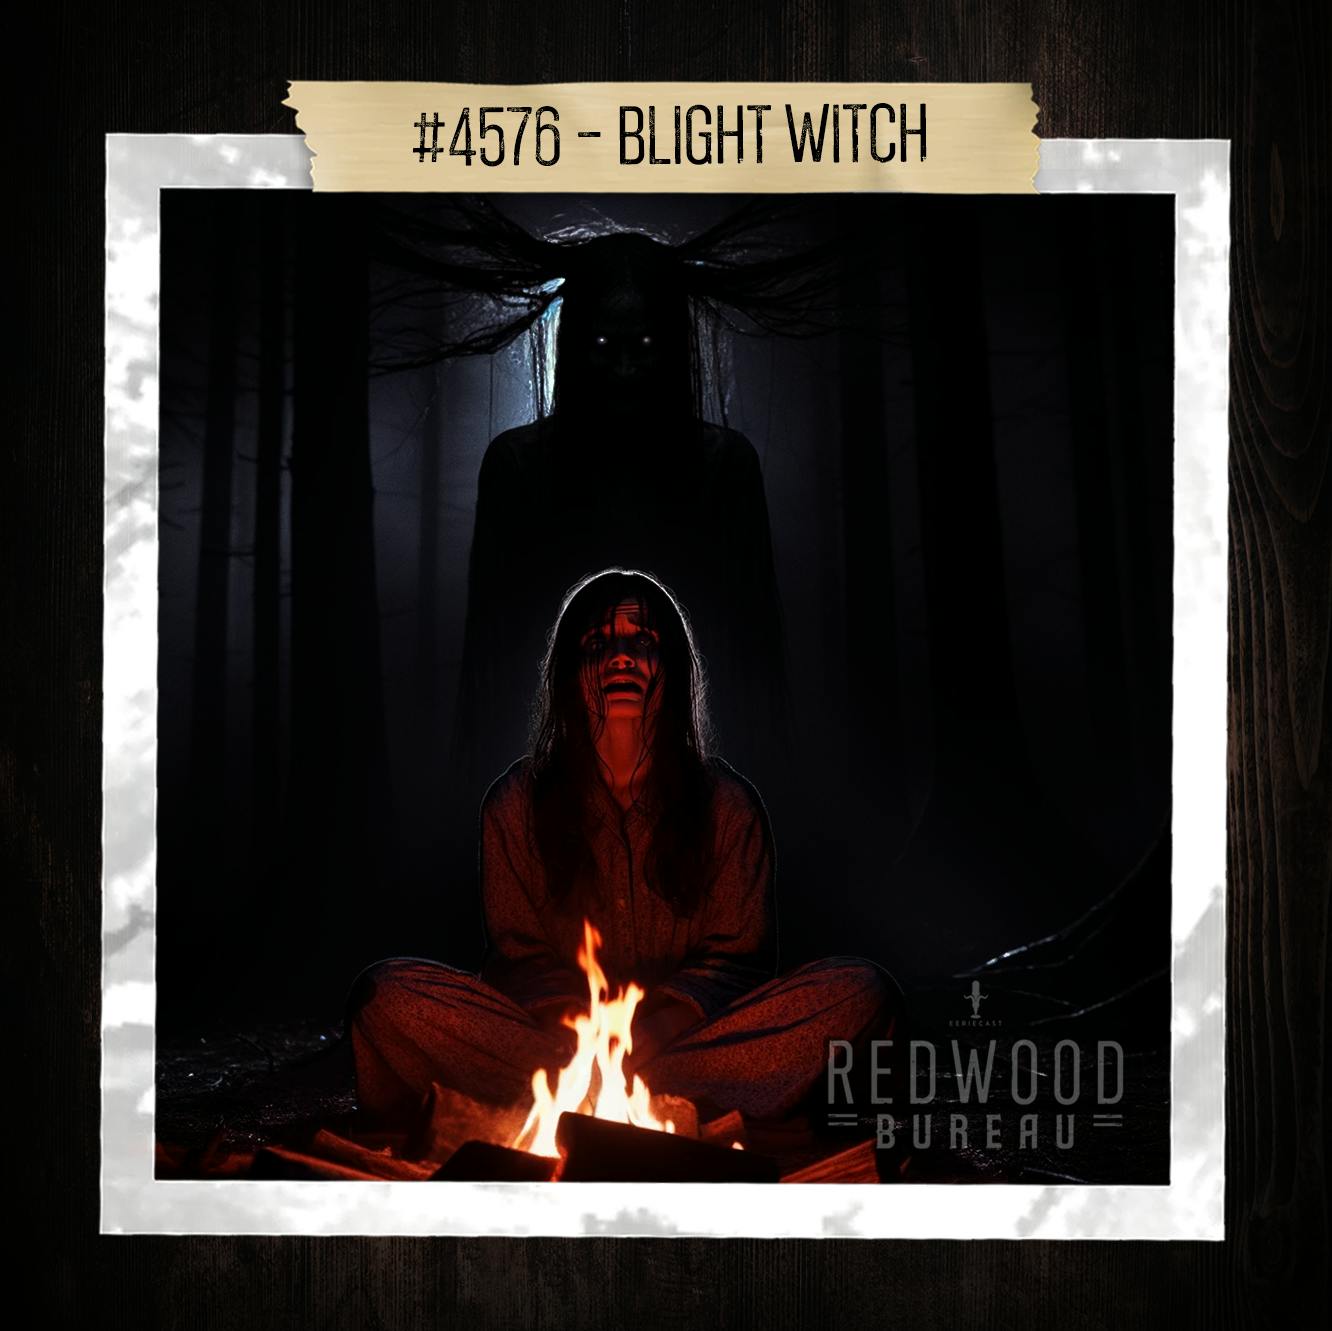 "BLIGHT WITCH" - Redwood Bureau Phenomenon #4576